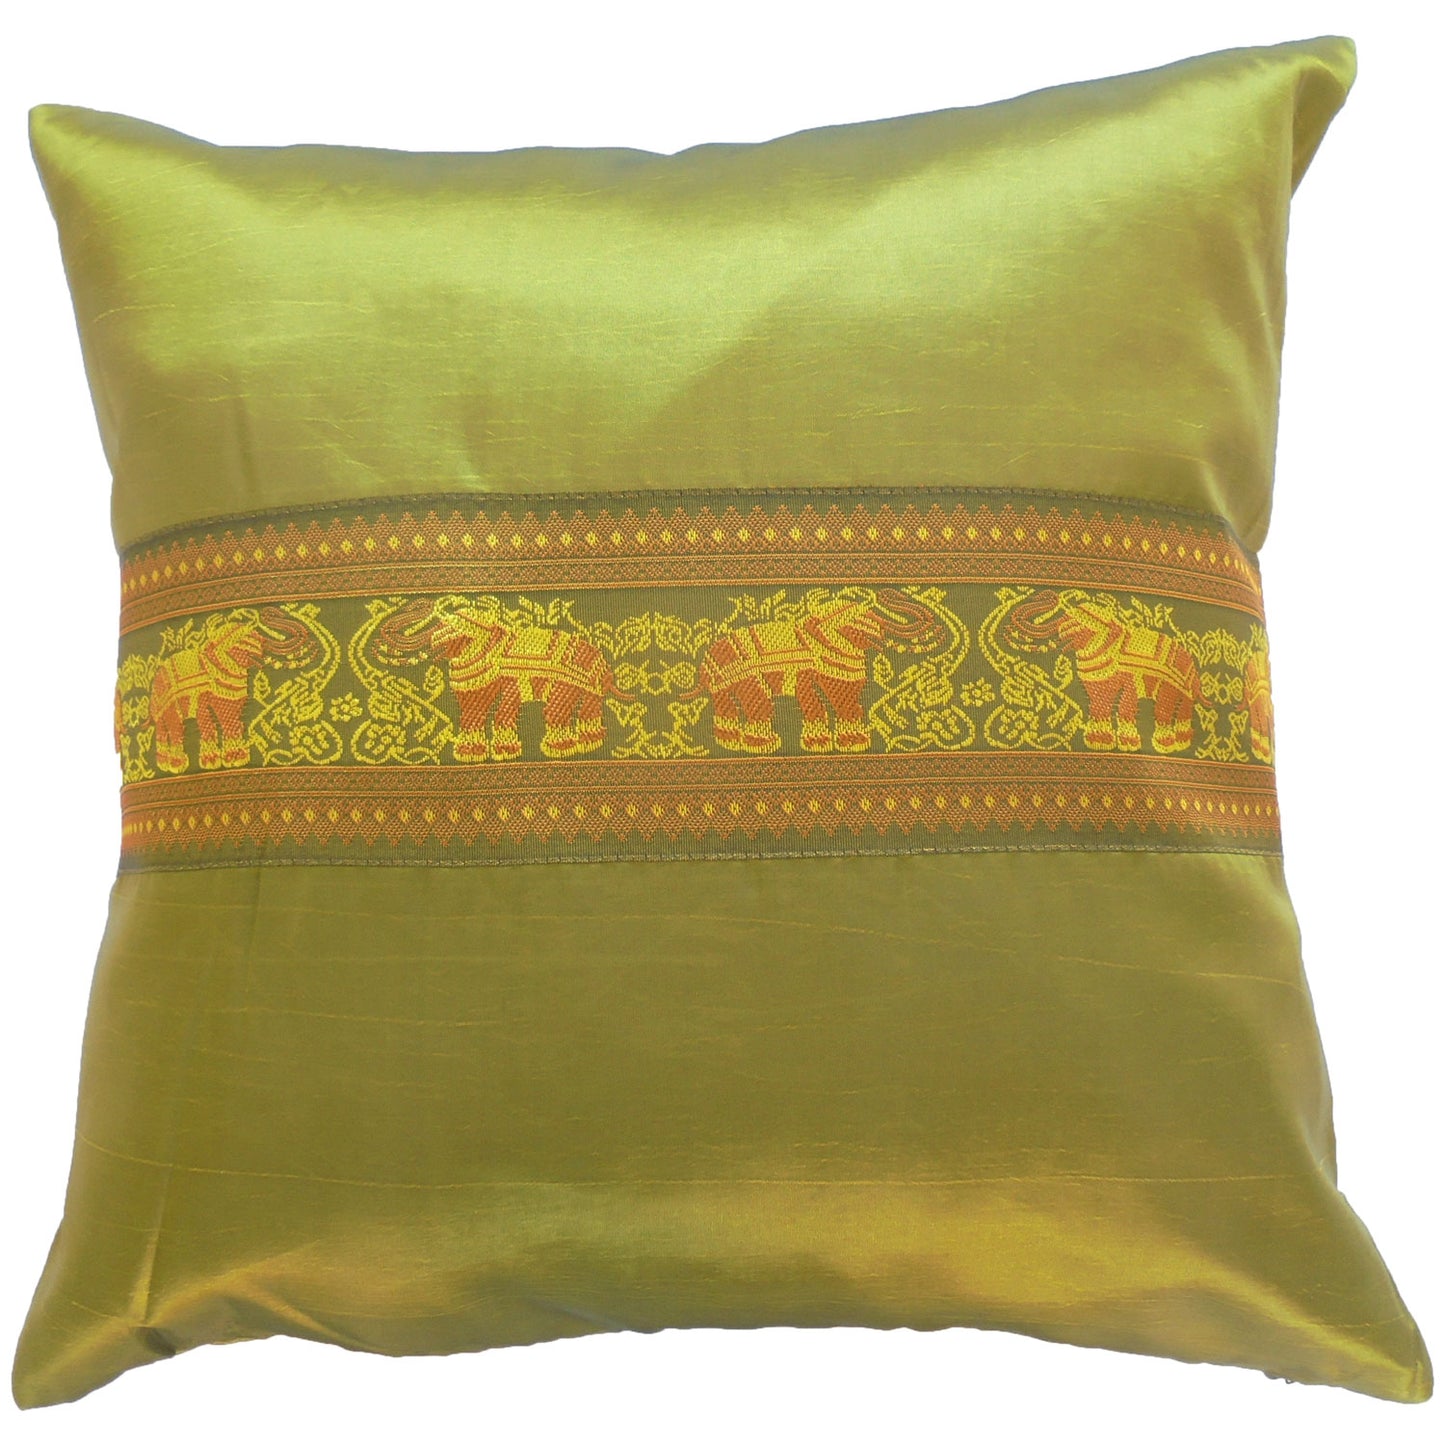 Kissen Kissenbezug Motiv Elefanten bunt verschiedene Farben 40x40cm Thai Seide Sofa Bett Gartenstuhl